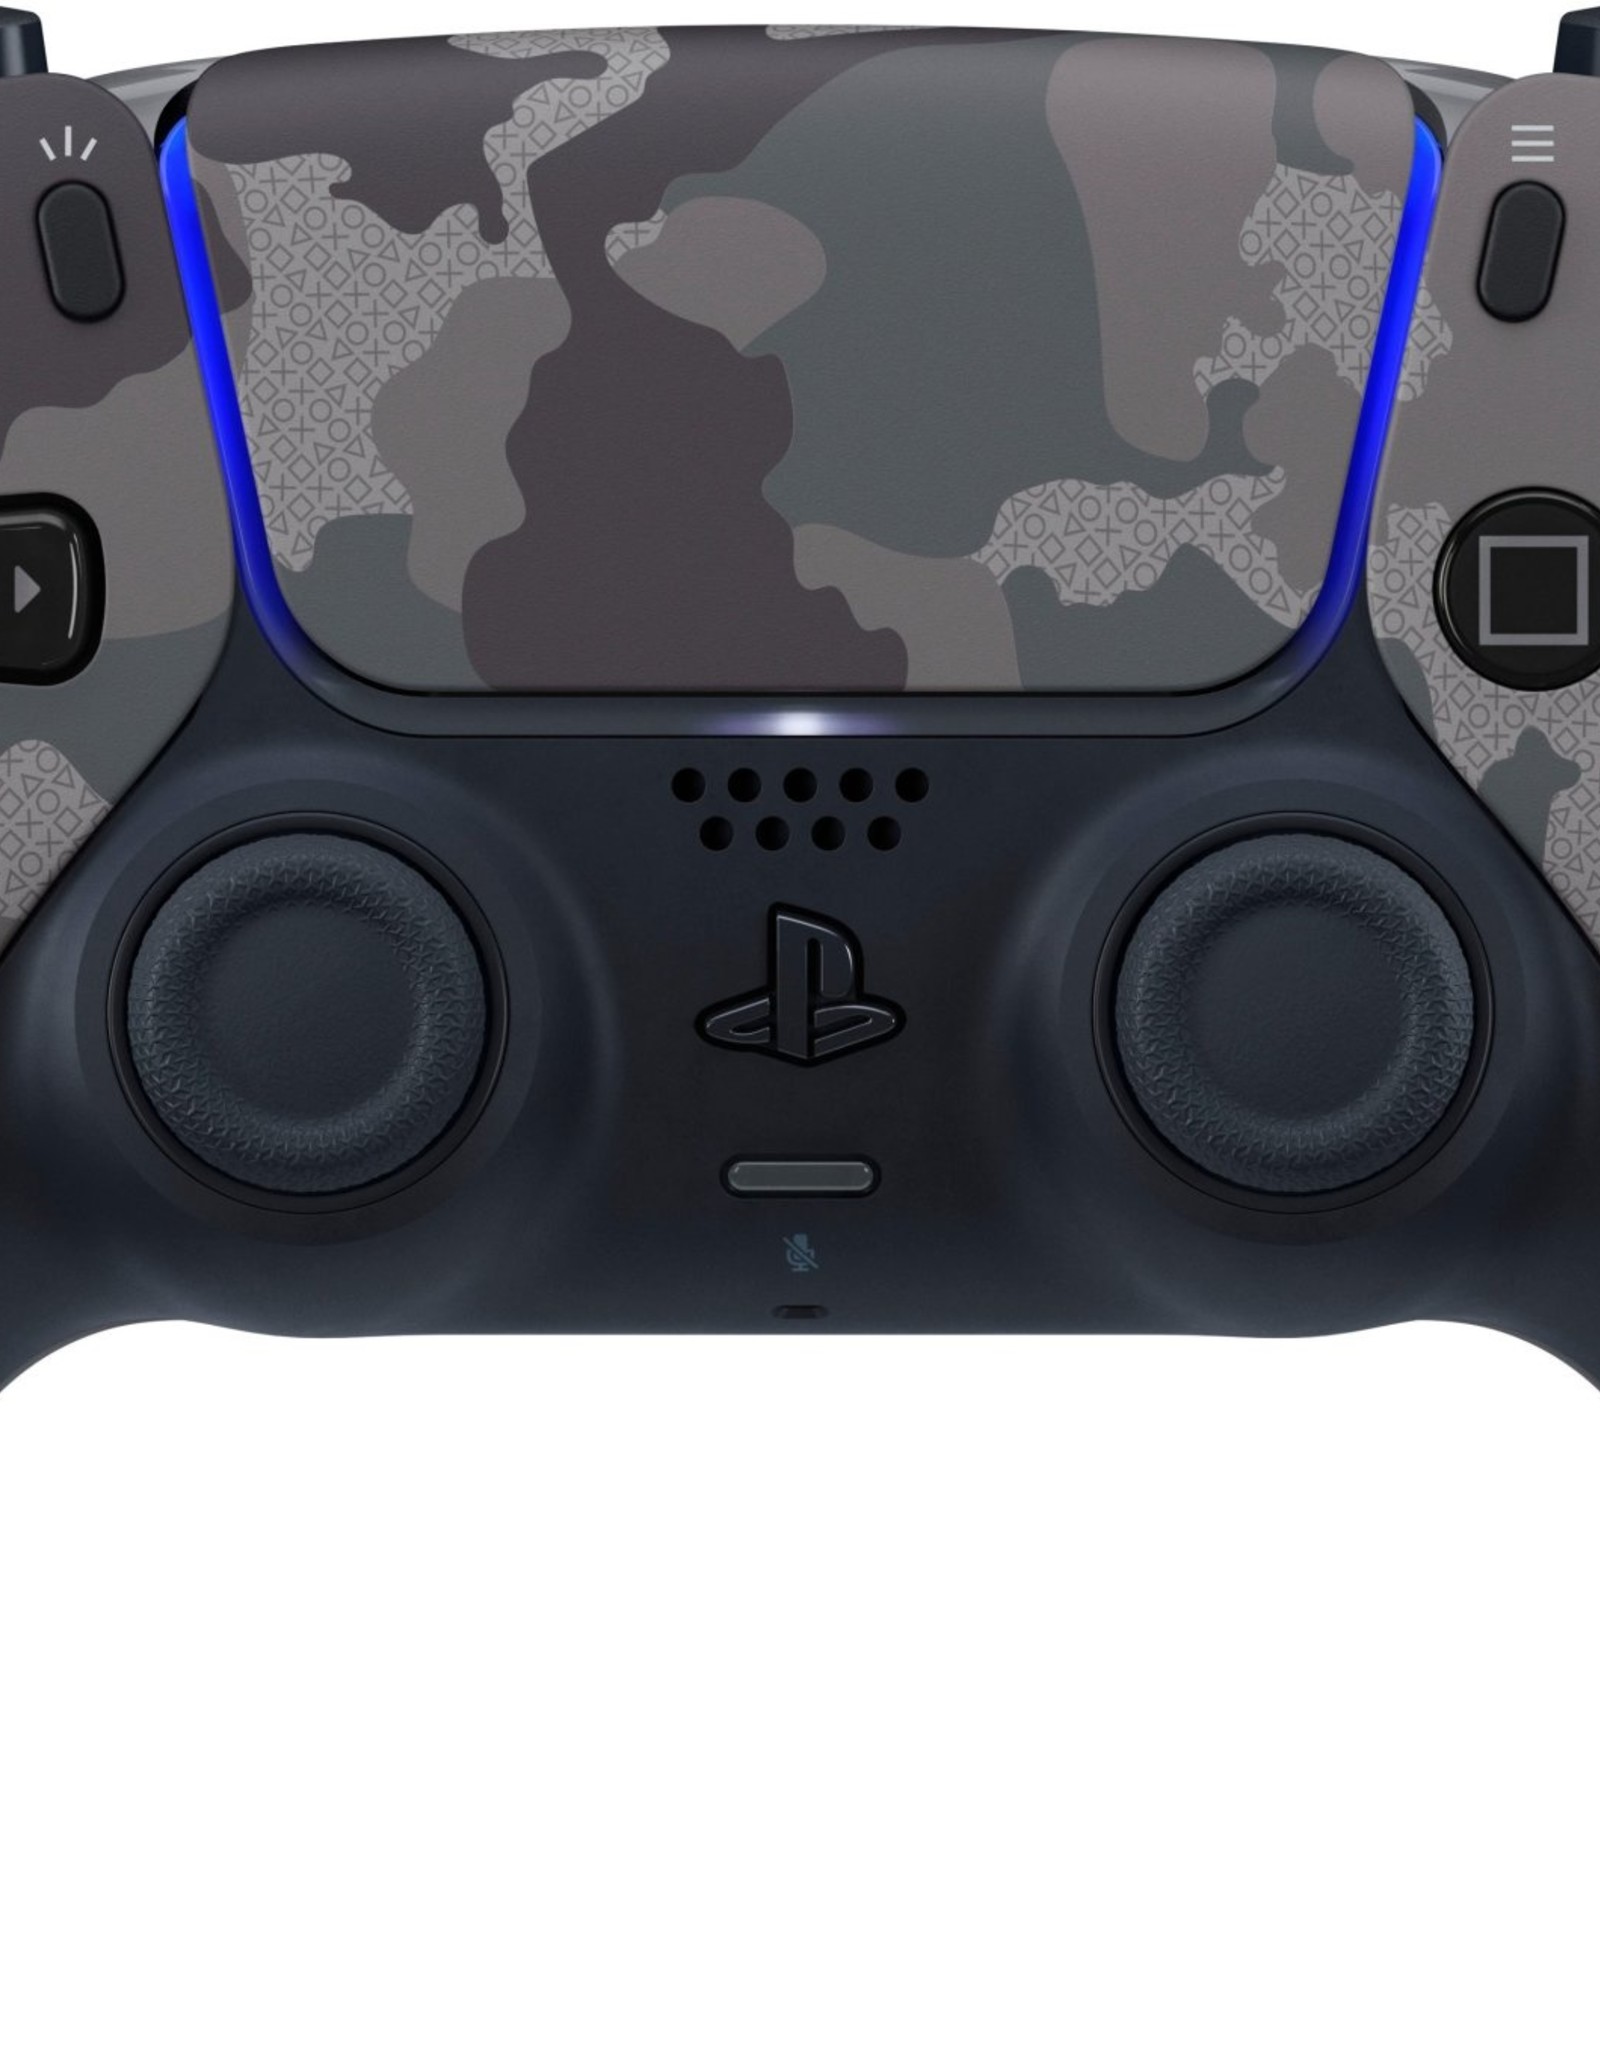 DualSense Wireless Controller for PlayStation 5 (Grey Camo)